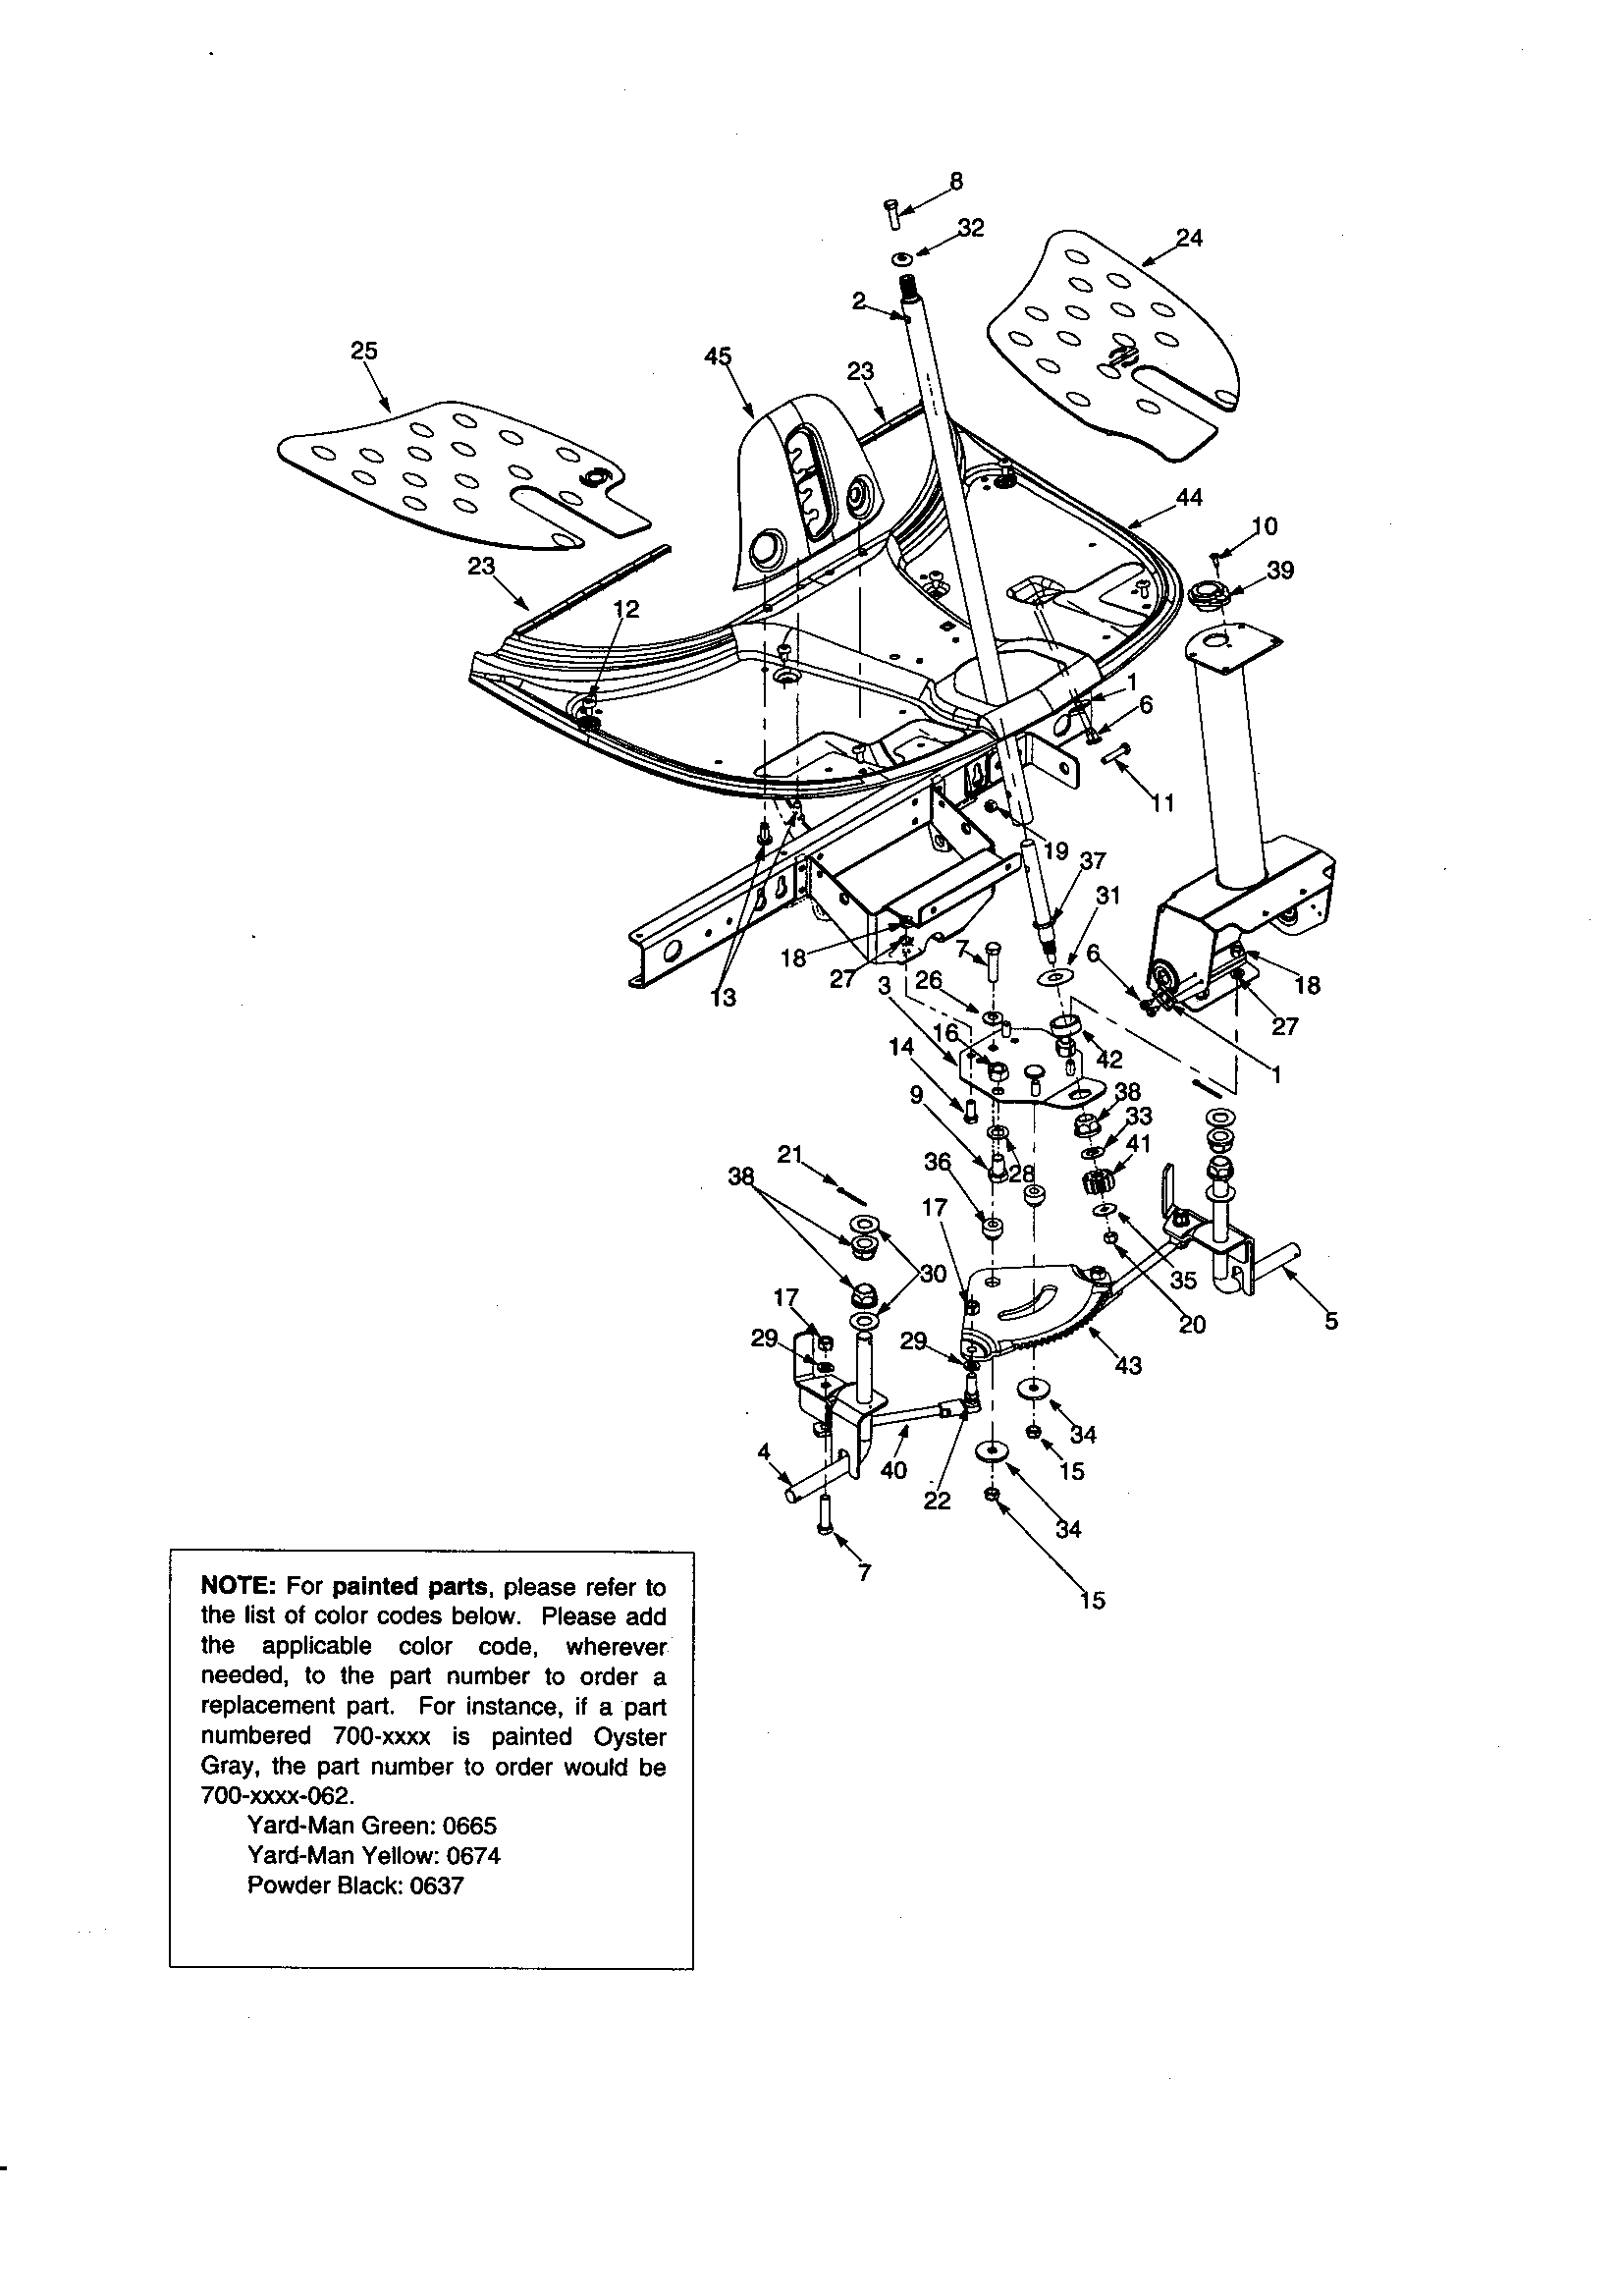 33 Yardman Lawn Mower Parts Diagram - Wiring Diagram List